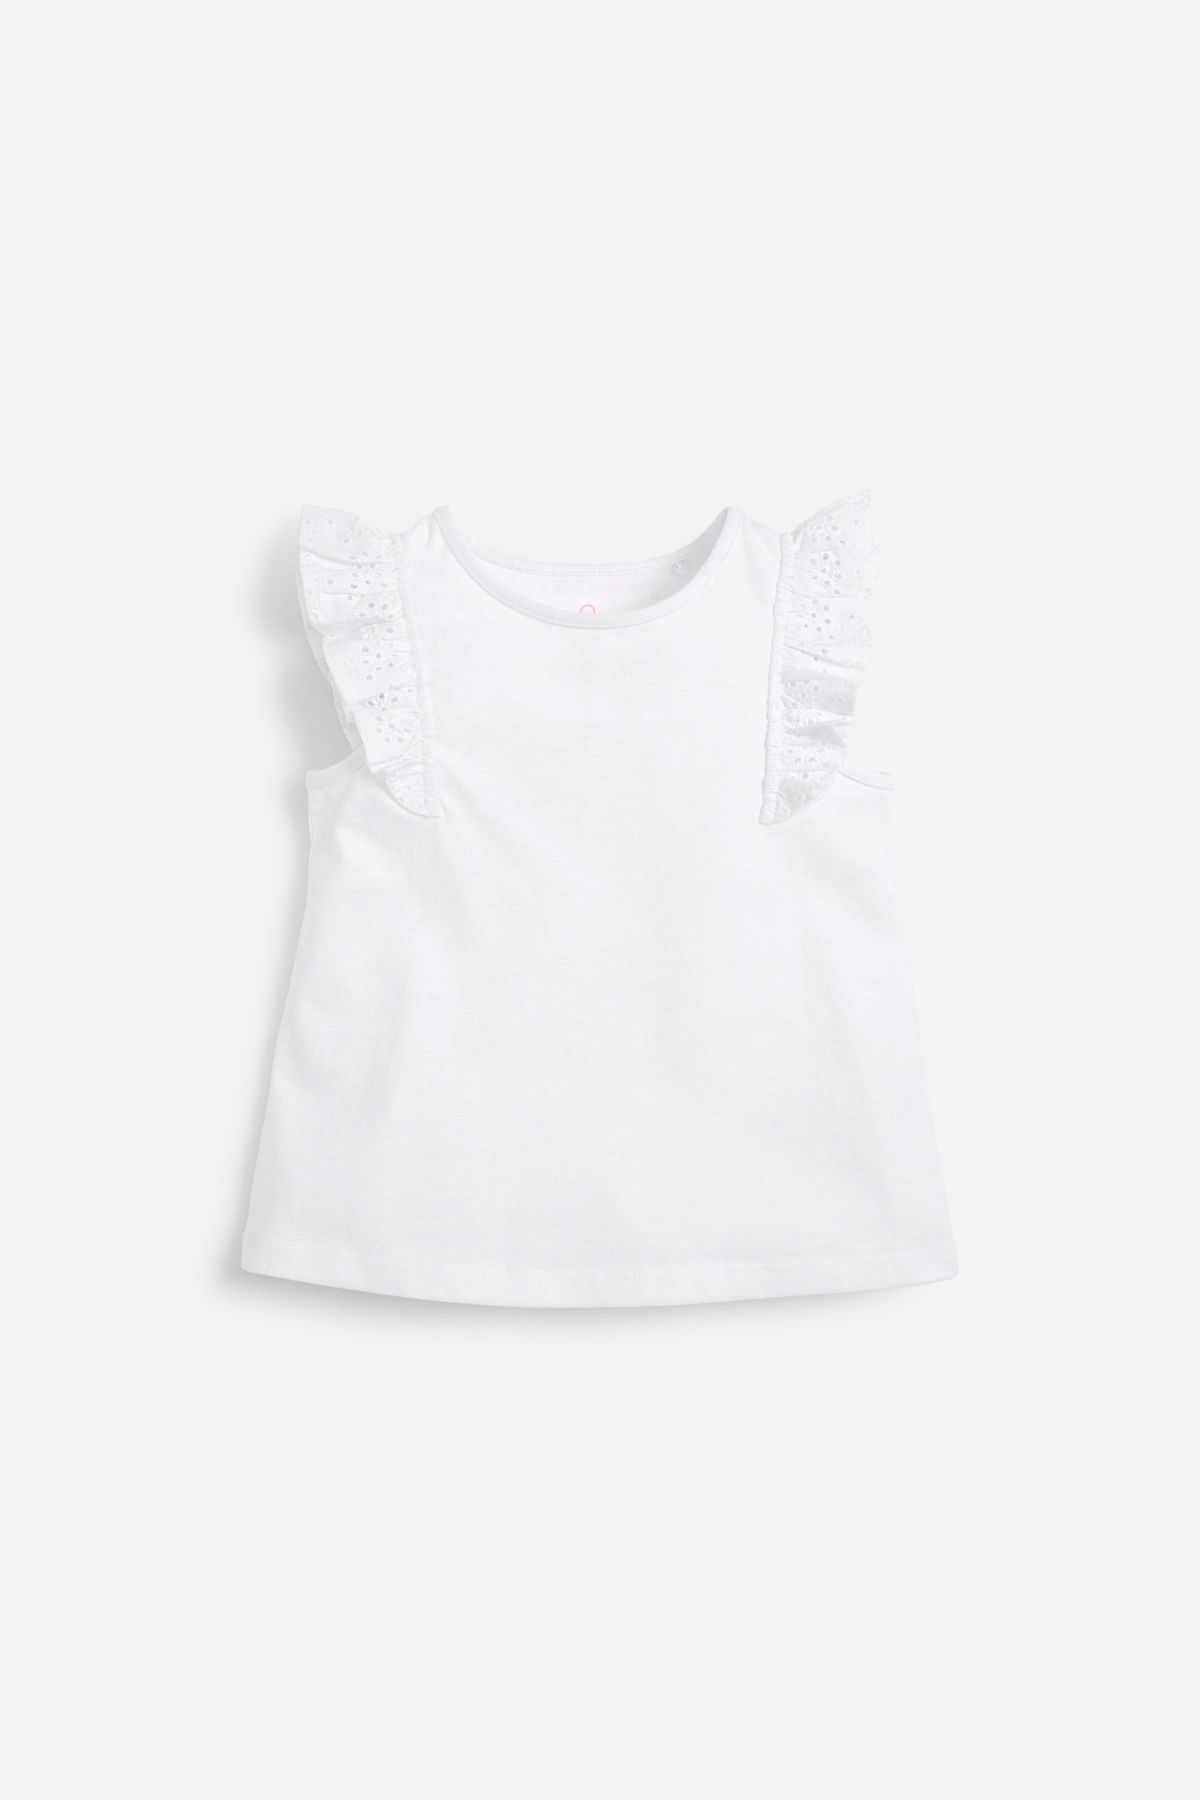 NEXT Broderie Frill Organic Vest White Girl Vests|akgalleria.com